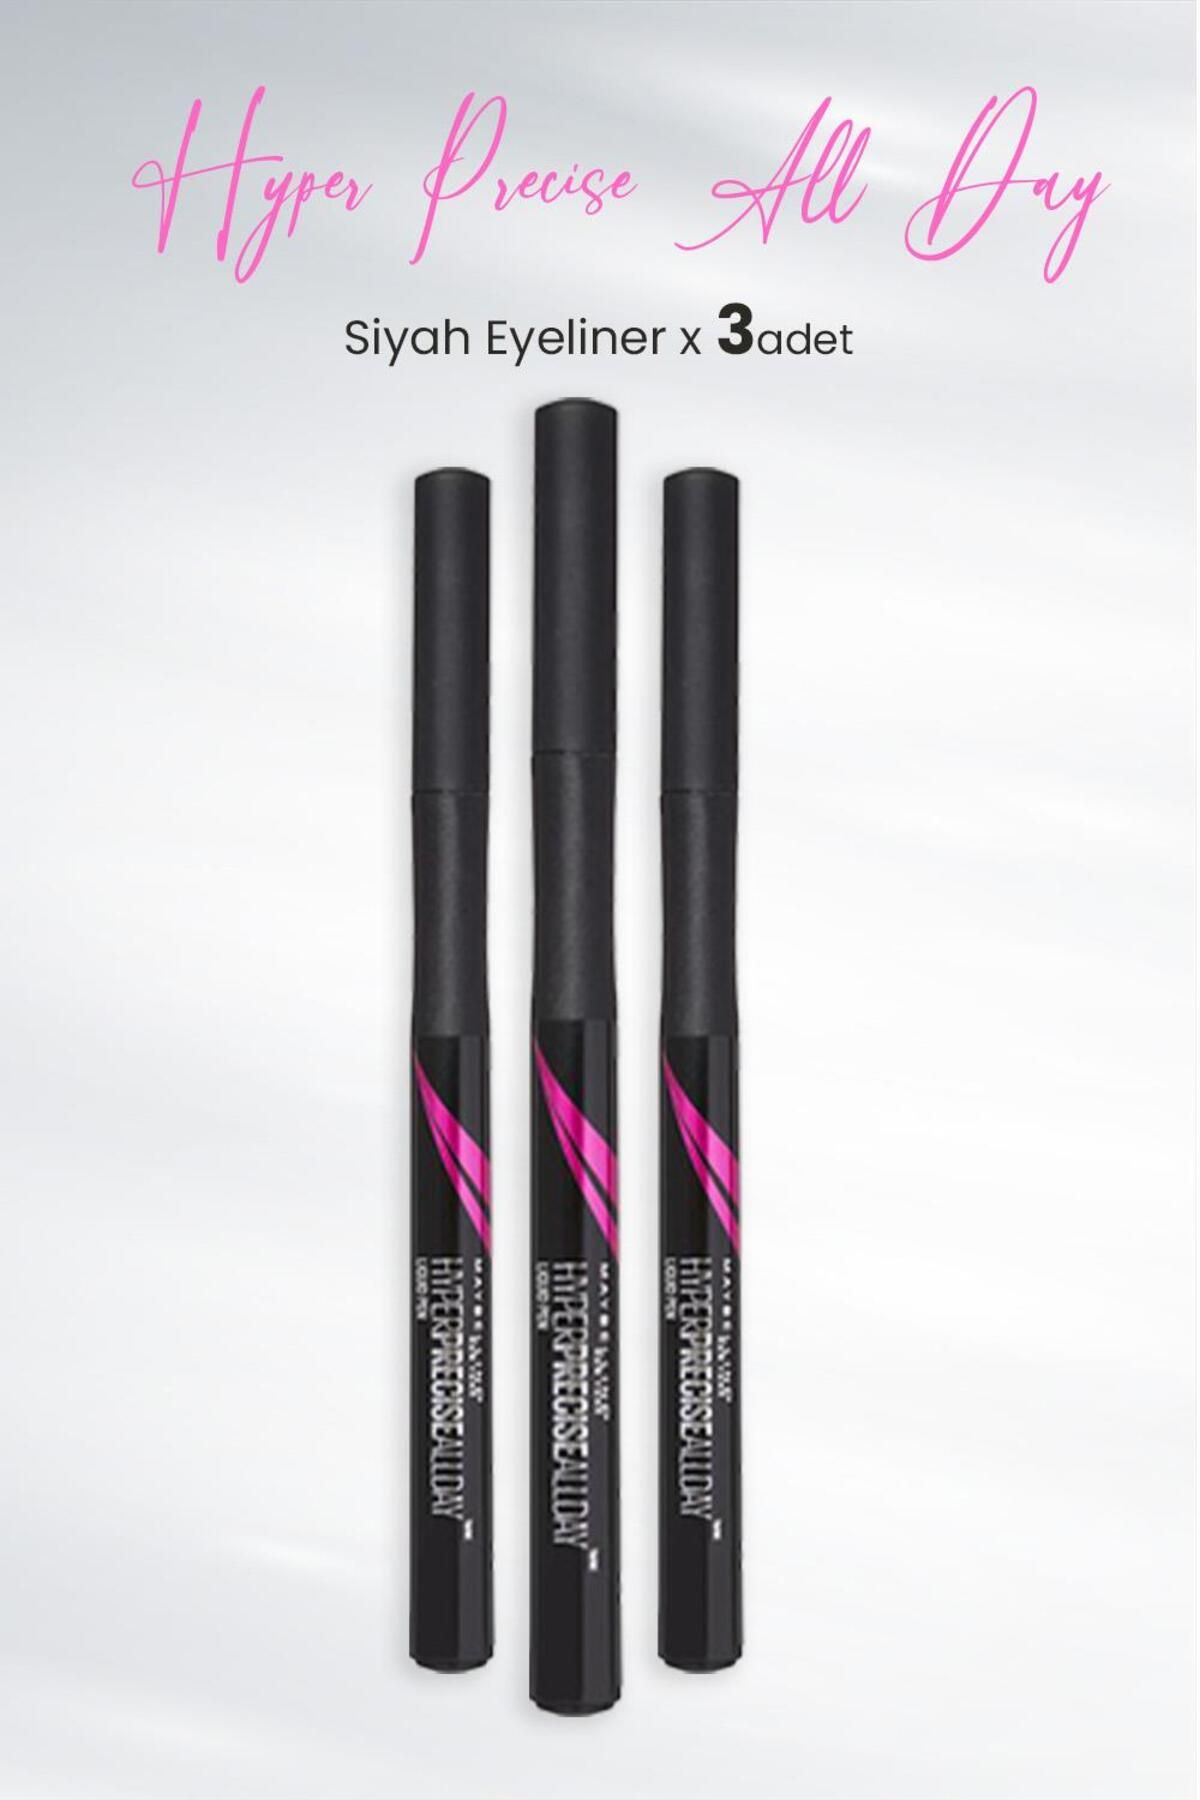 Maybelline New York Eyeliner Hyper Precise All Day Siyah X 3 Adet